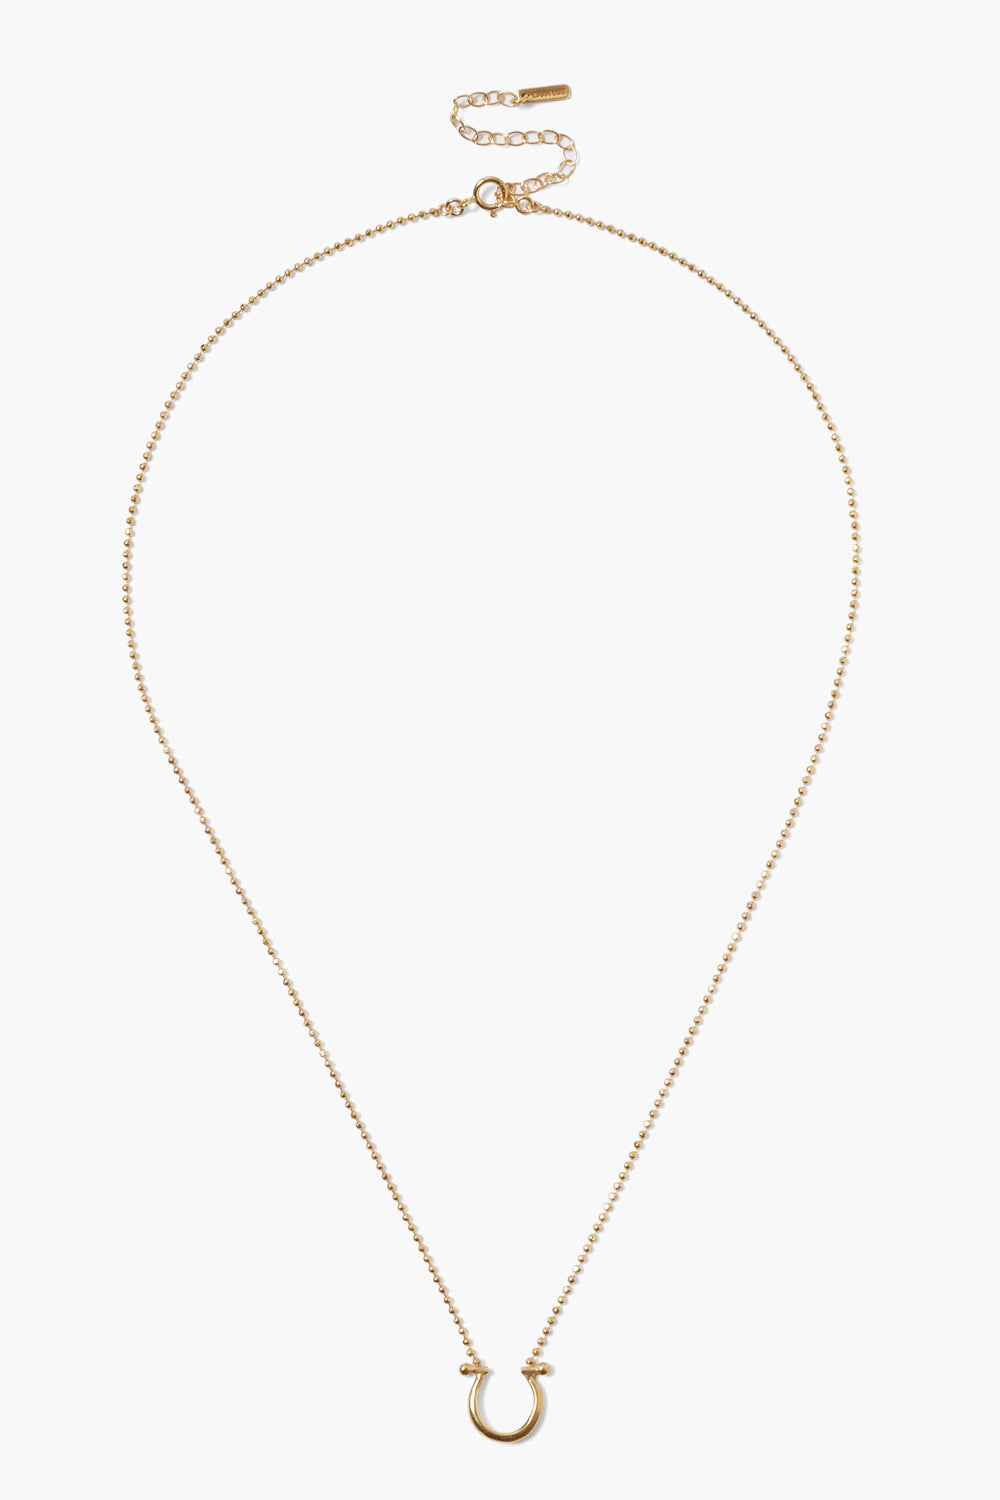 Horseshoe Necklace Yellow Gold – Chan Luu